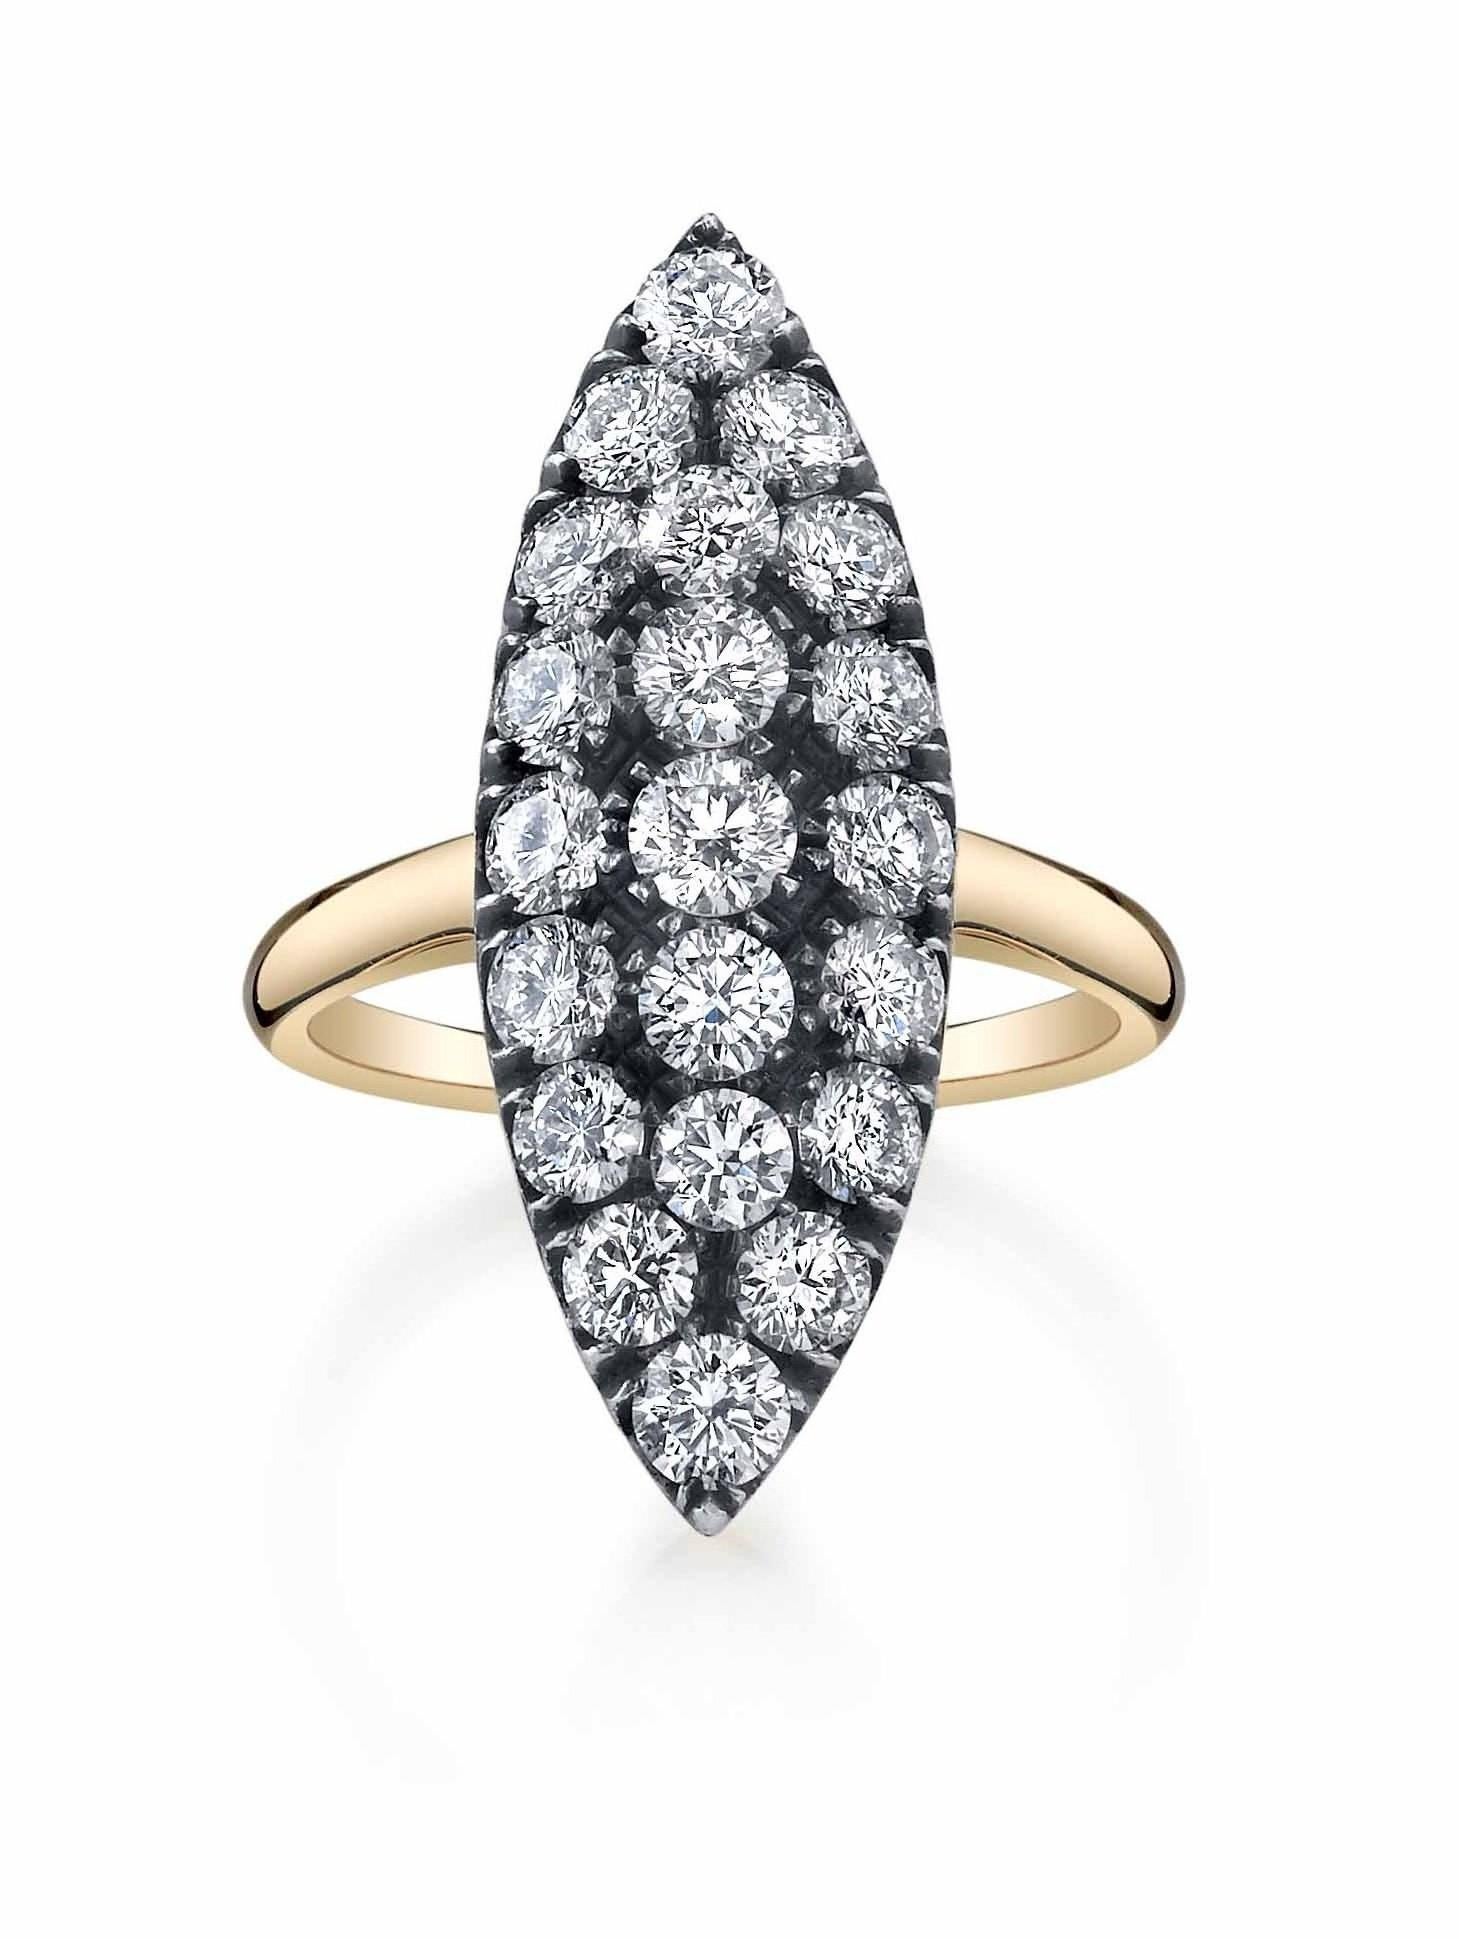 2 carat marquise diamond ring